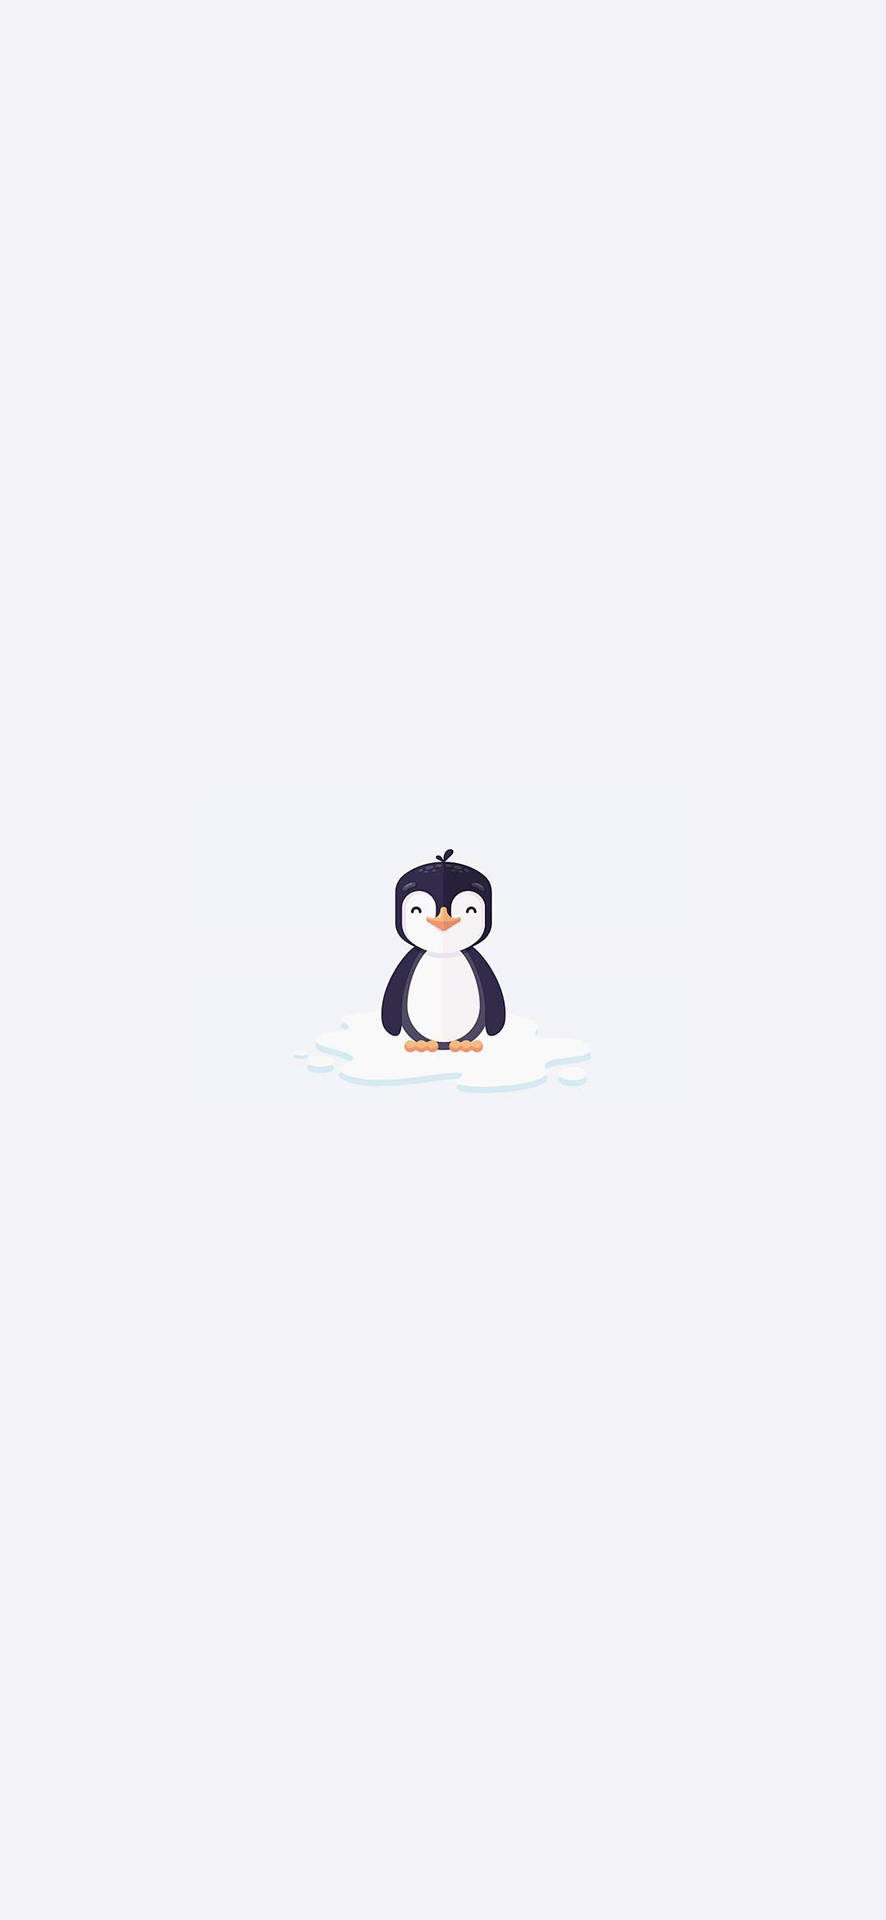 White Adorable Penguin Iphone Wallpaper